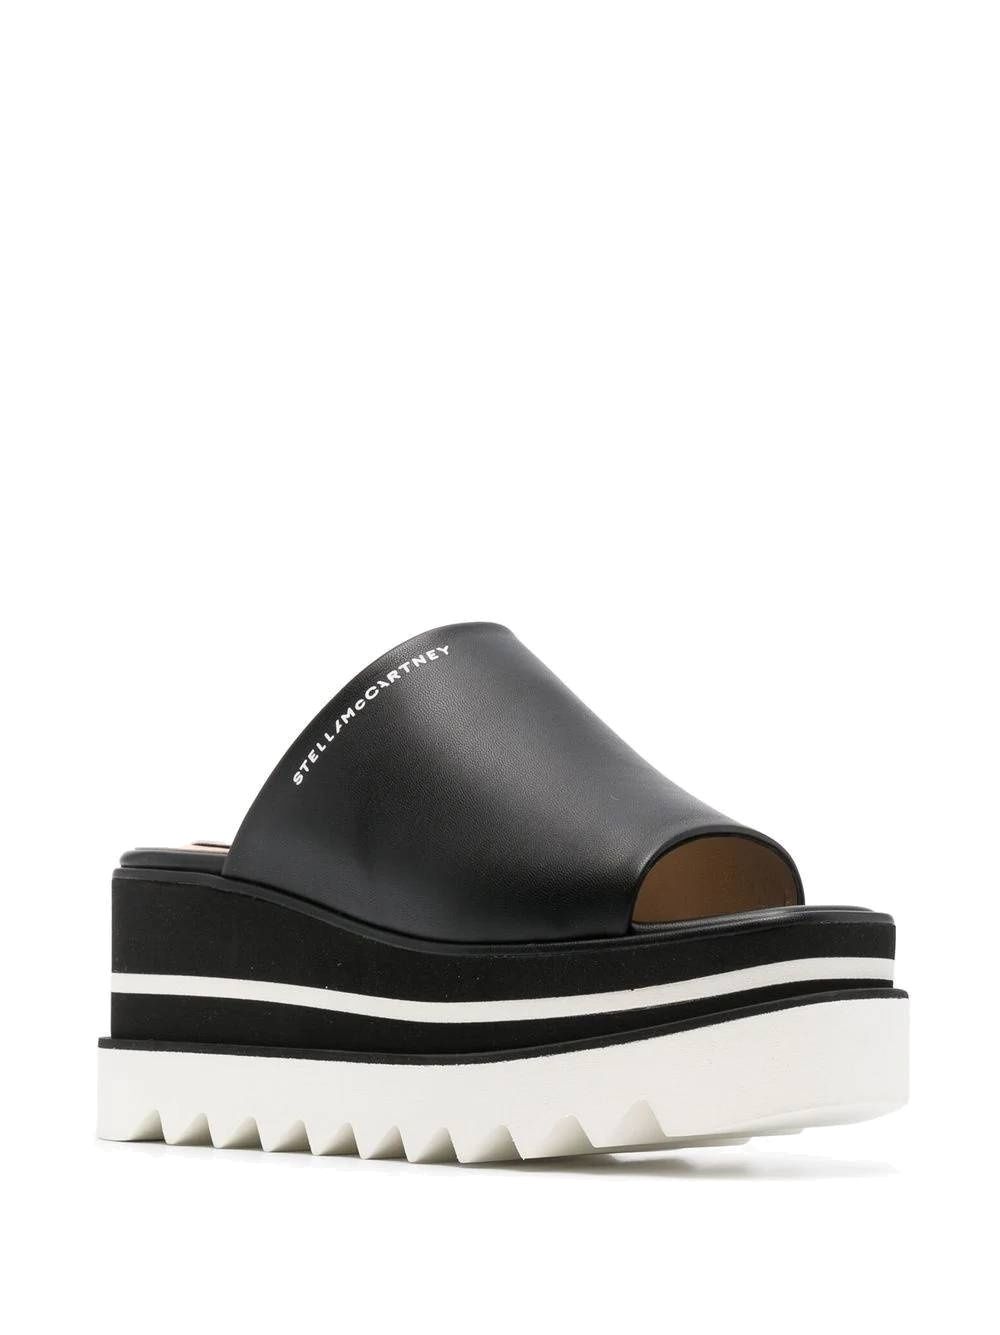 Slip-on sandals with platform sole